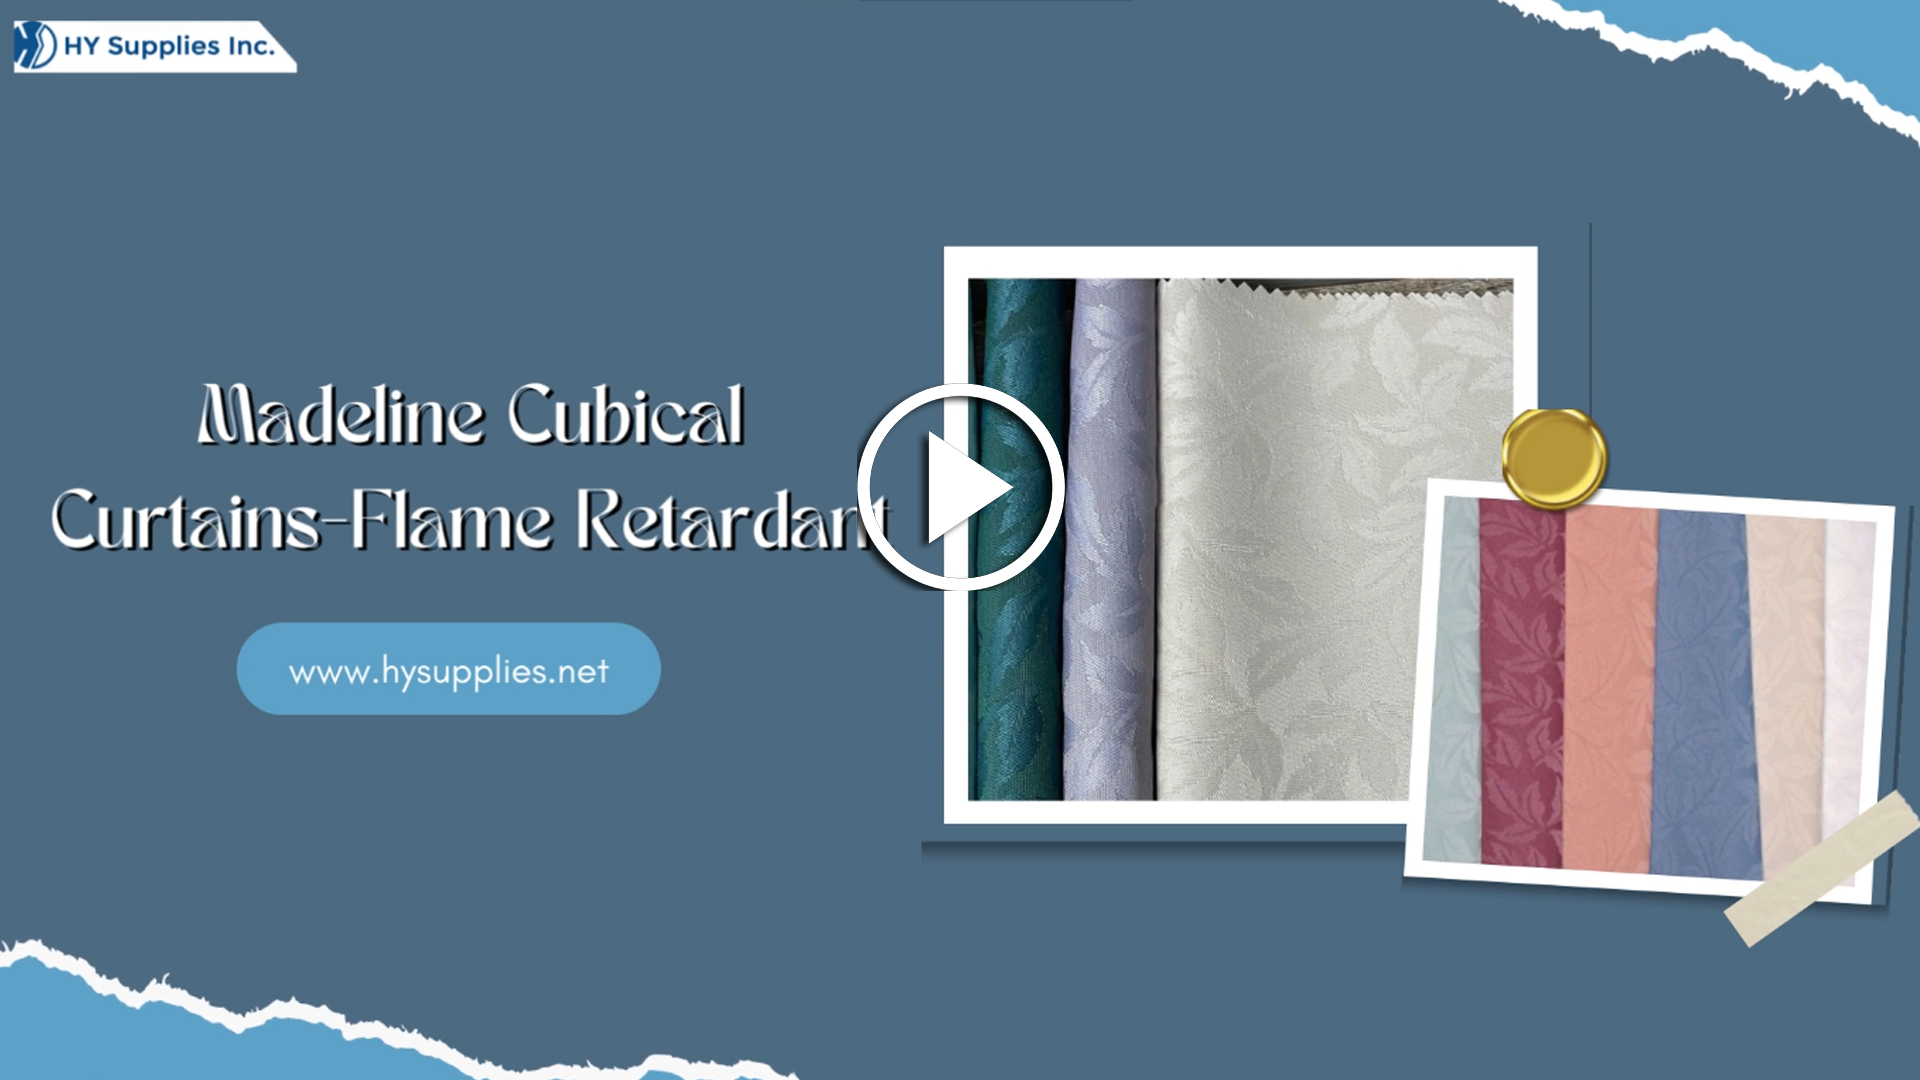 Madeline Cubical Curtains-Flame Retardant